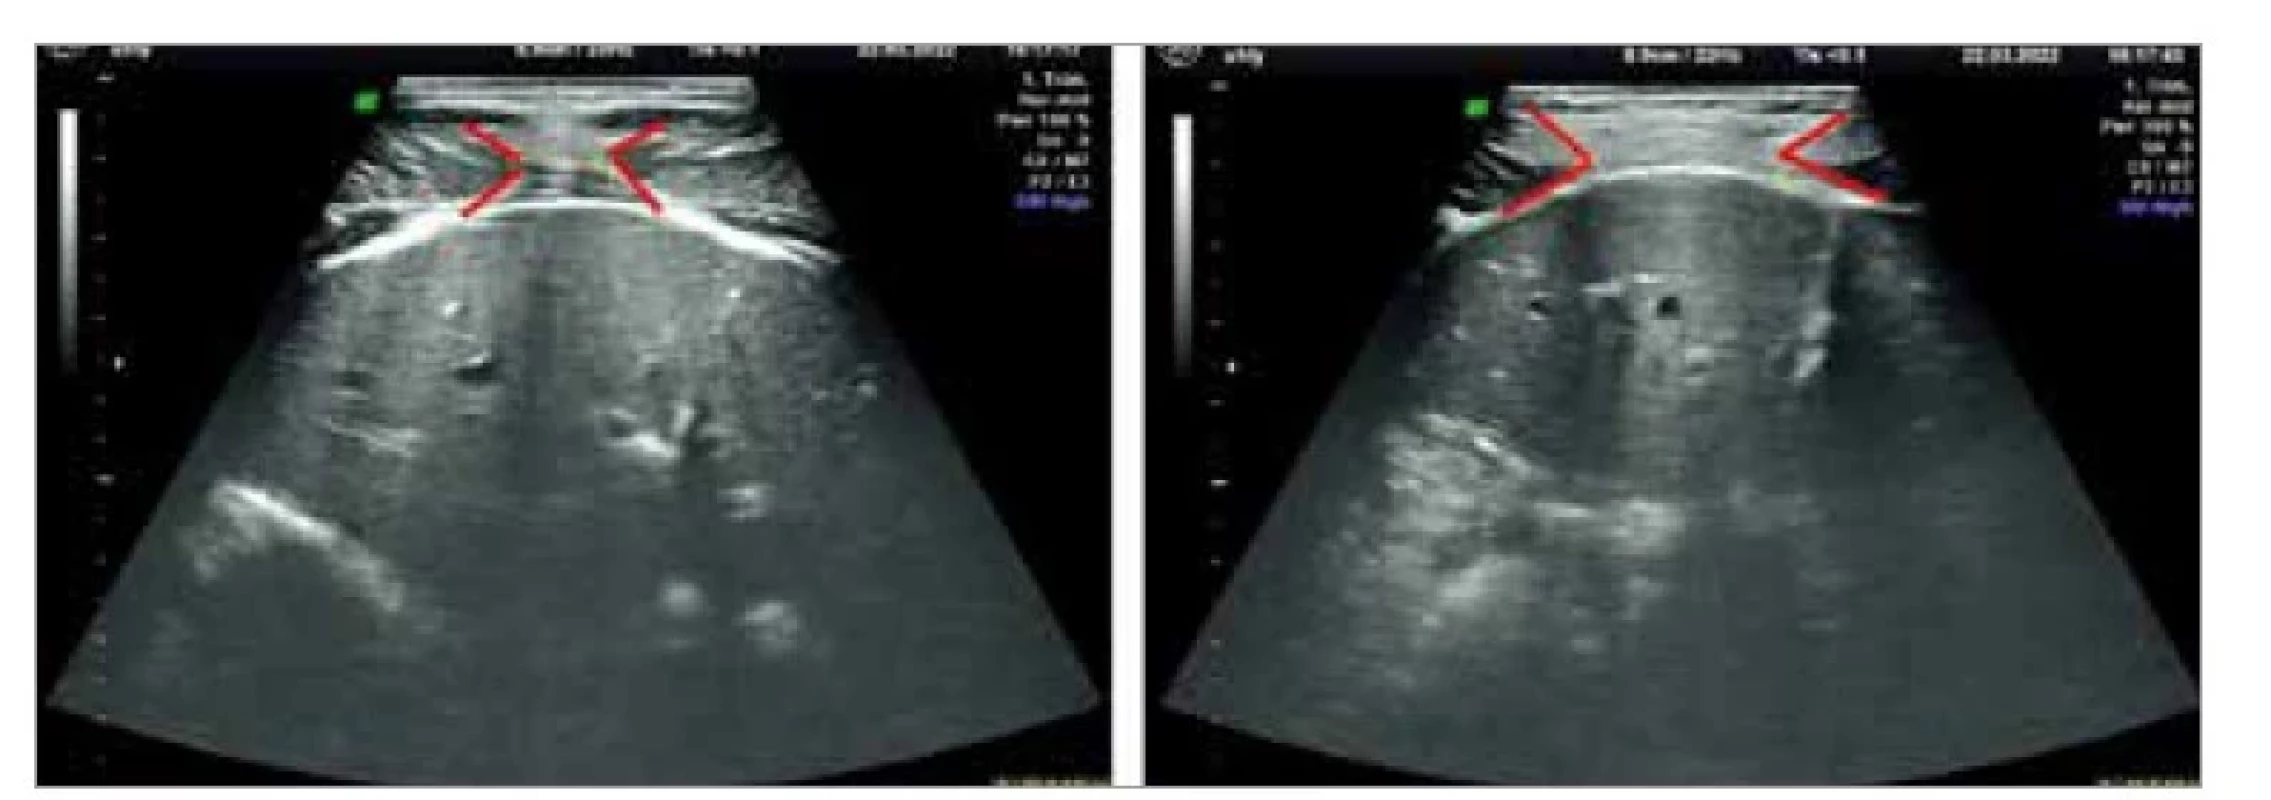 Vyšetrenie diastázy m. rectus abdominis prostredníctvom
2D ultrazvuku – naľavo bez diastázy, napravo s miernou diastázou.<br>
Fig. 1. Examination of diastasis m. rectus abdominis through 2D ultrasound –
without
diastasis on the left, with a slight diastasis on the right.